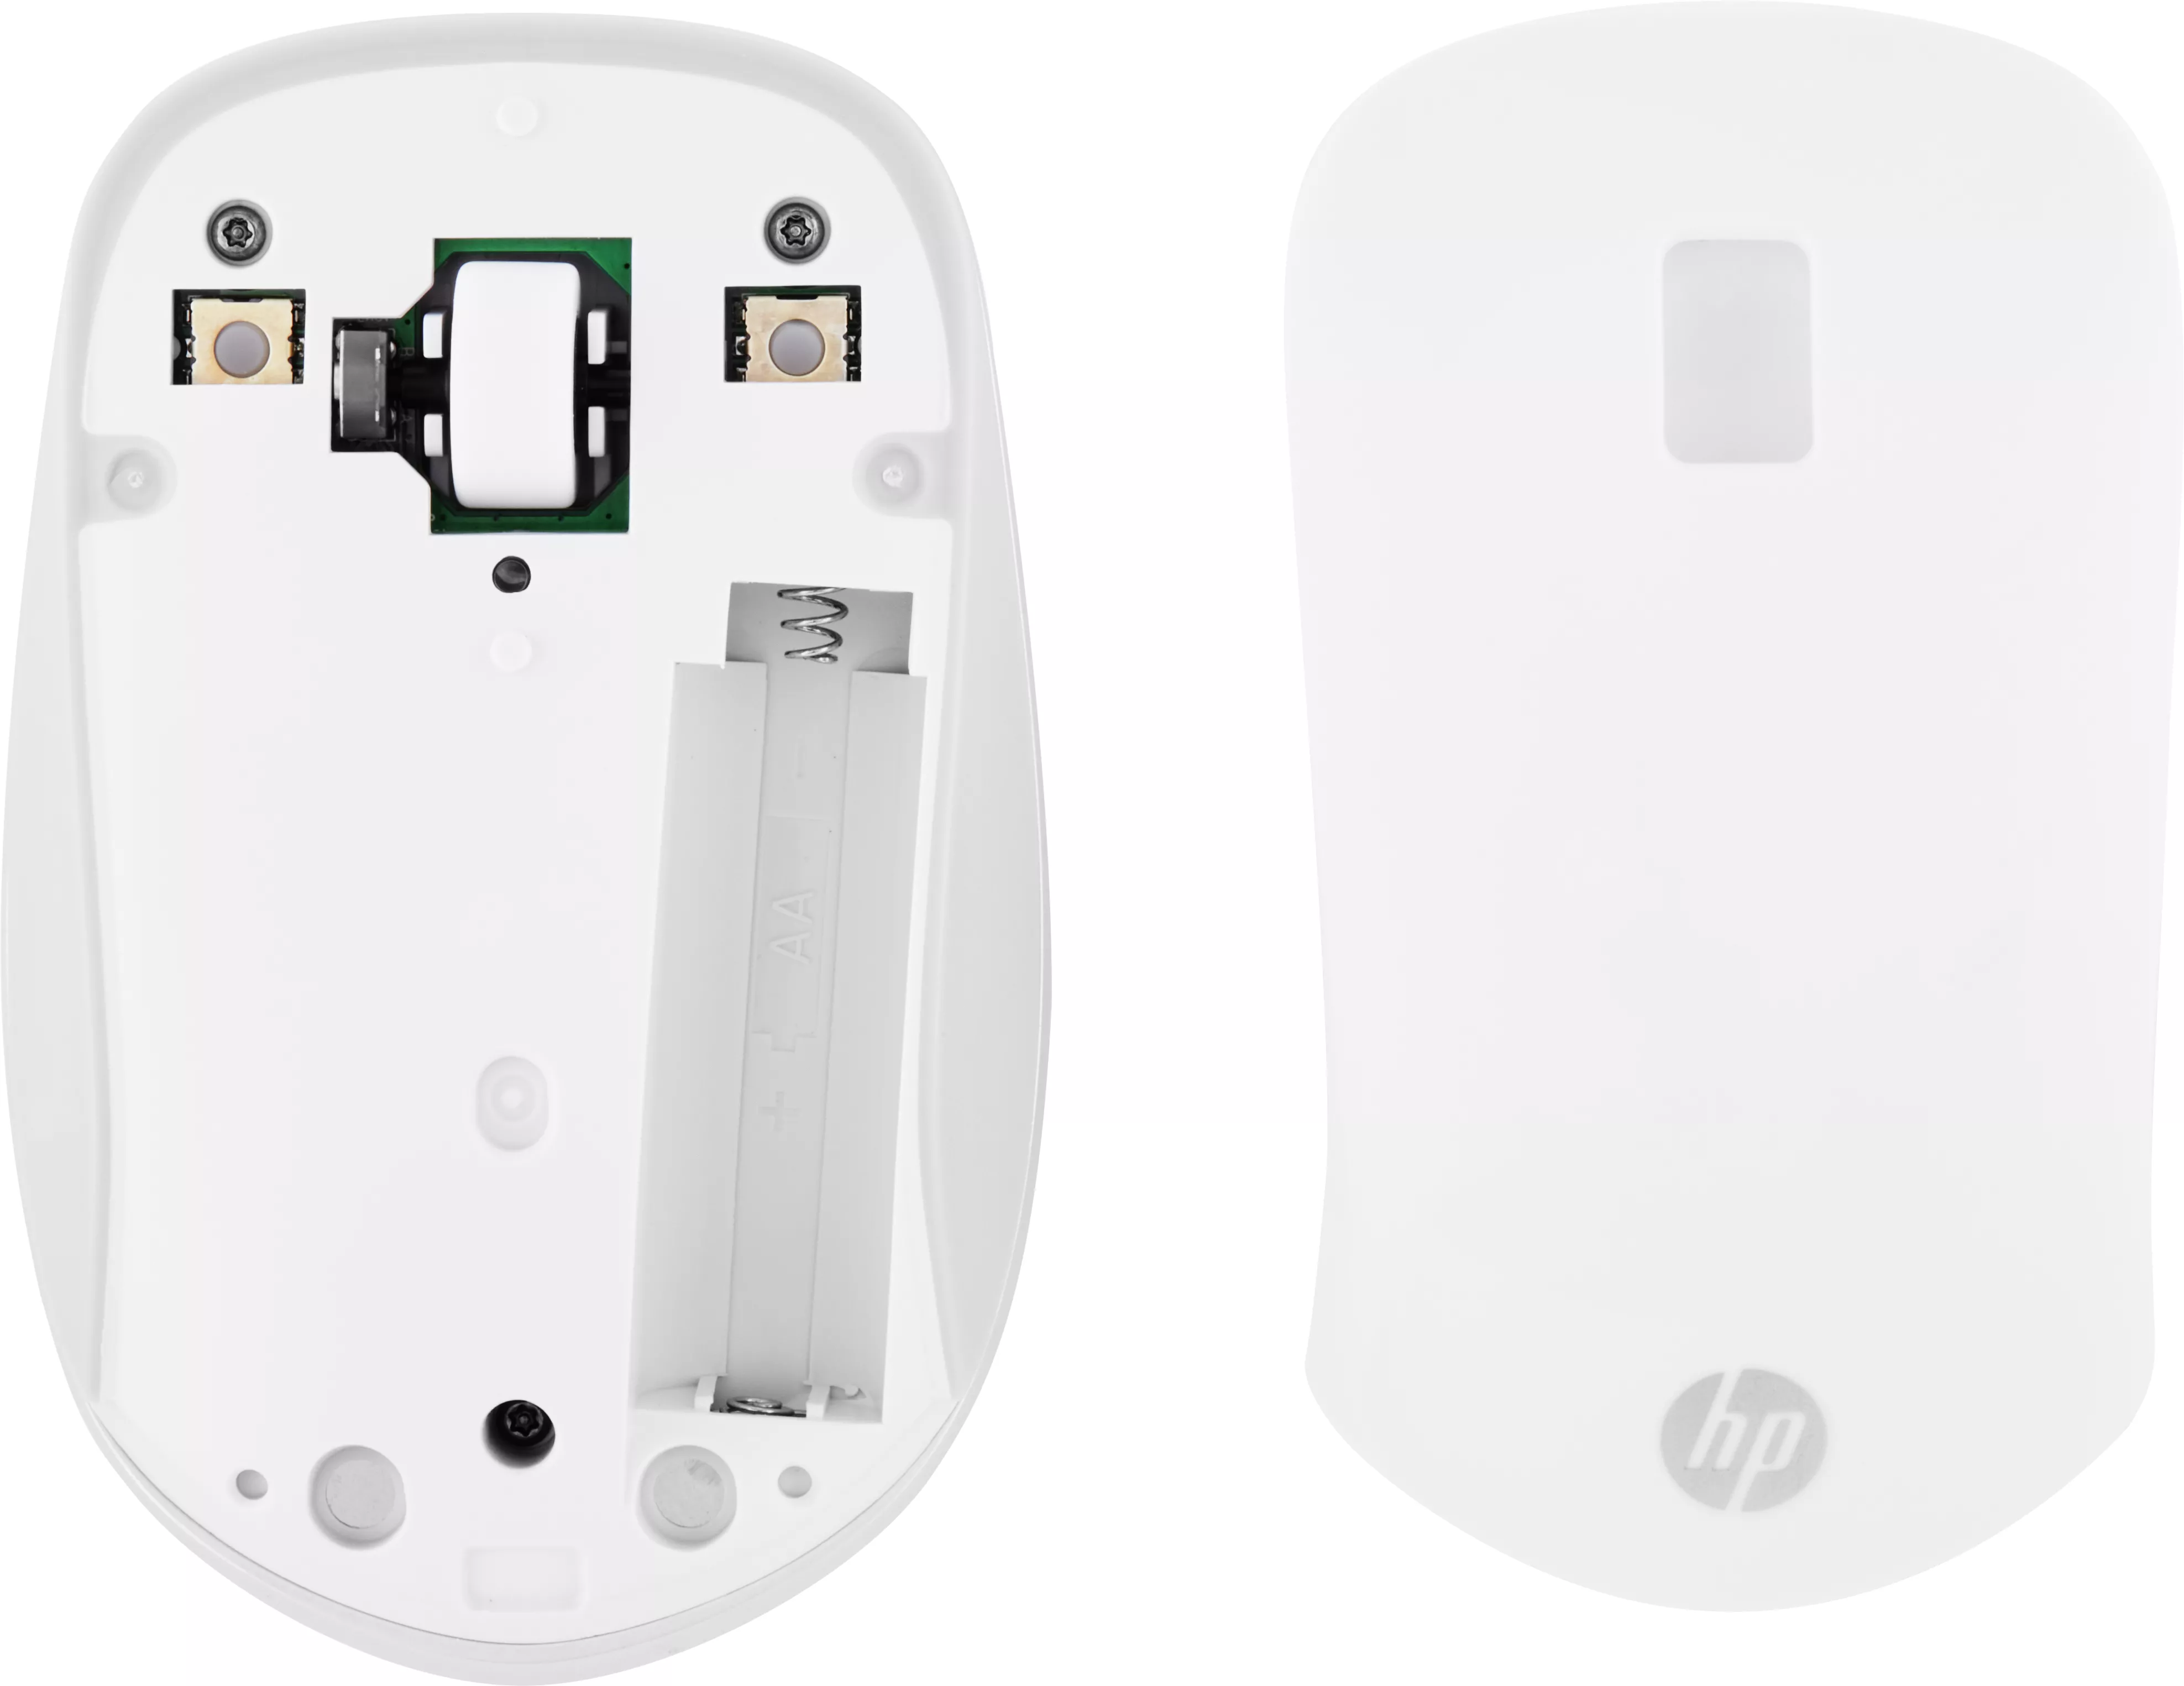 Vente HP 410 Souris Bluetooth ultra-plate blanche HP au meilleur prix - visuel 8